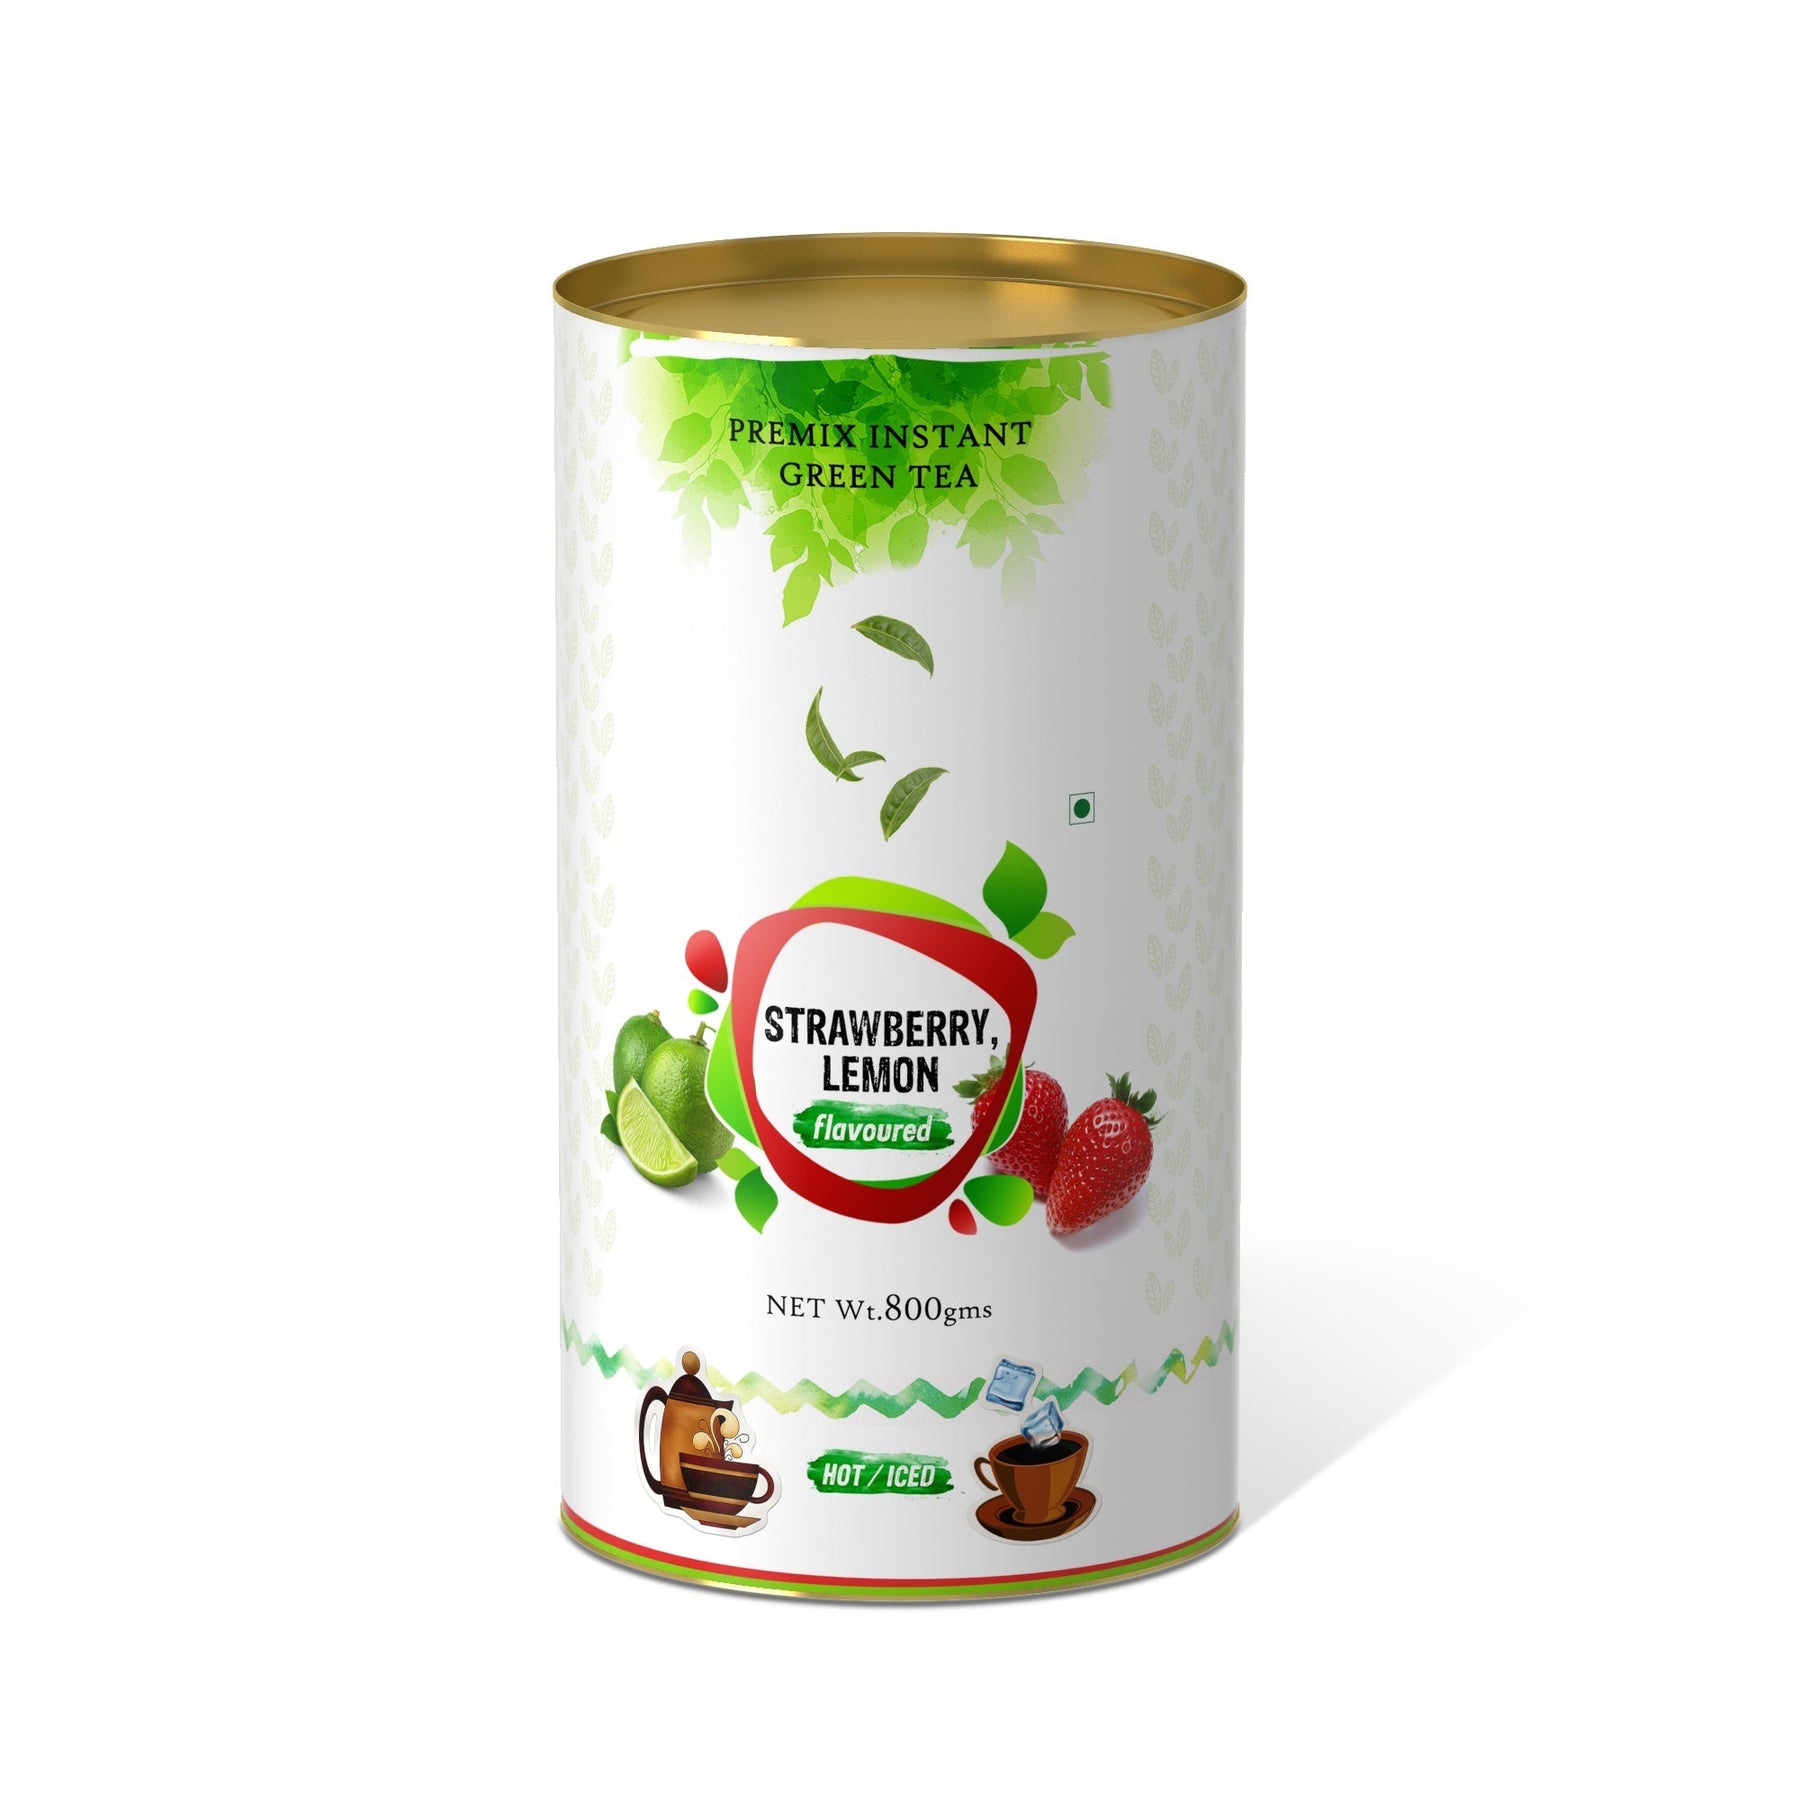 Strawberry Lemon Flavored Instant Green Tea - 800 gms